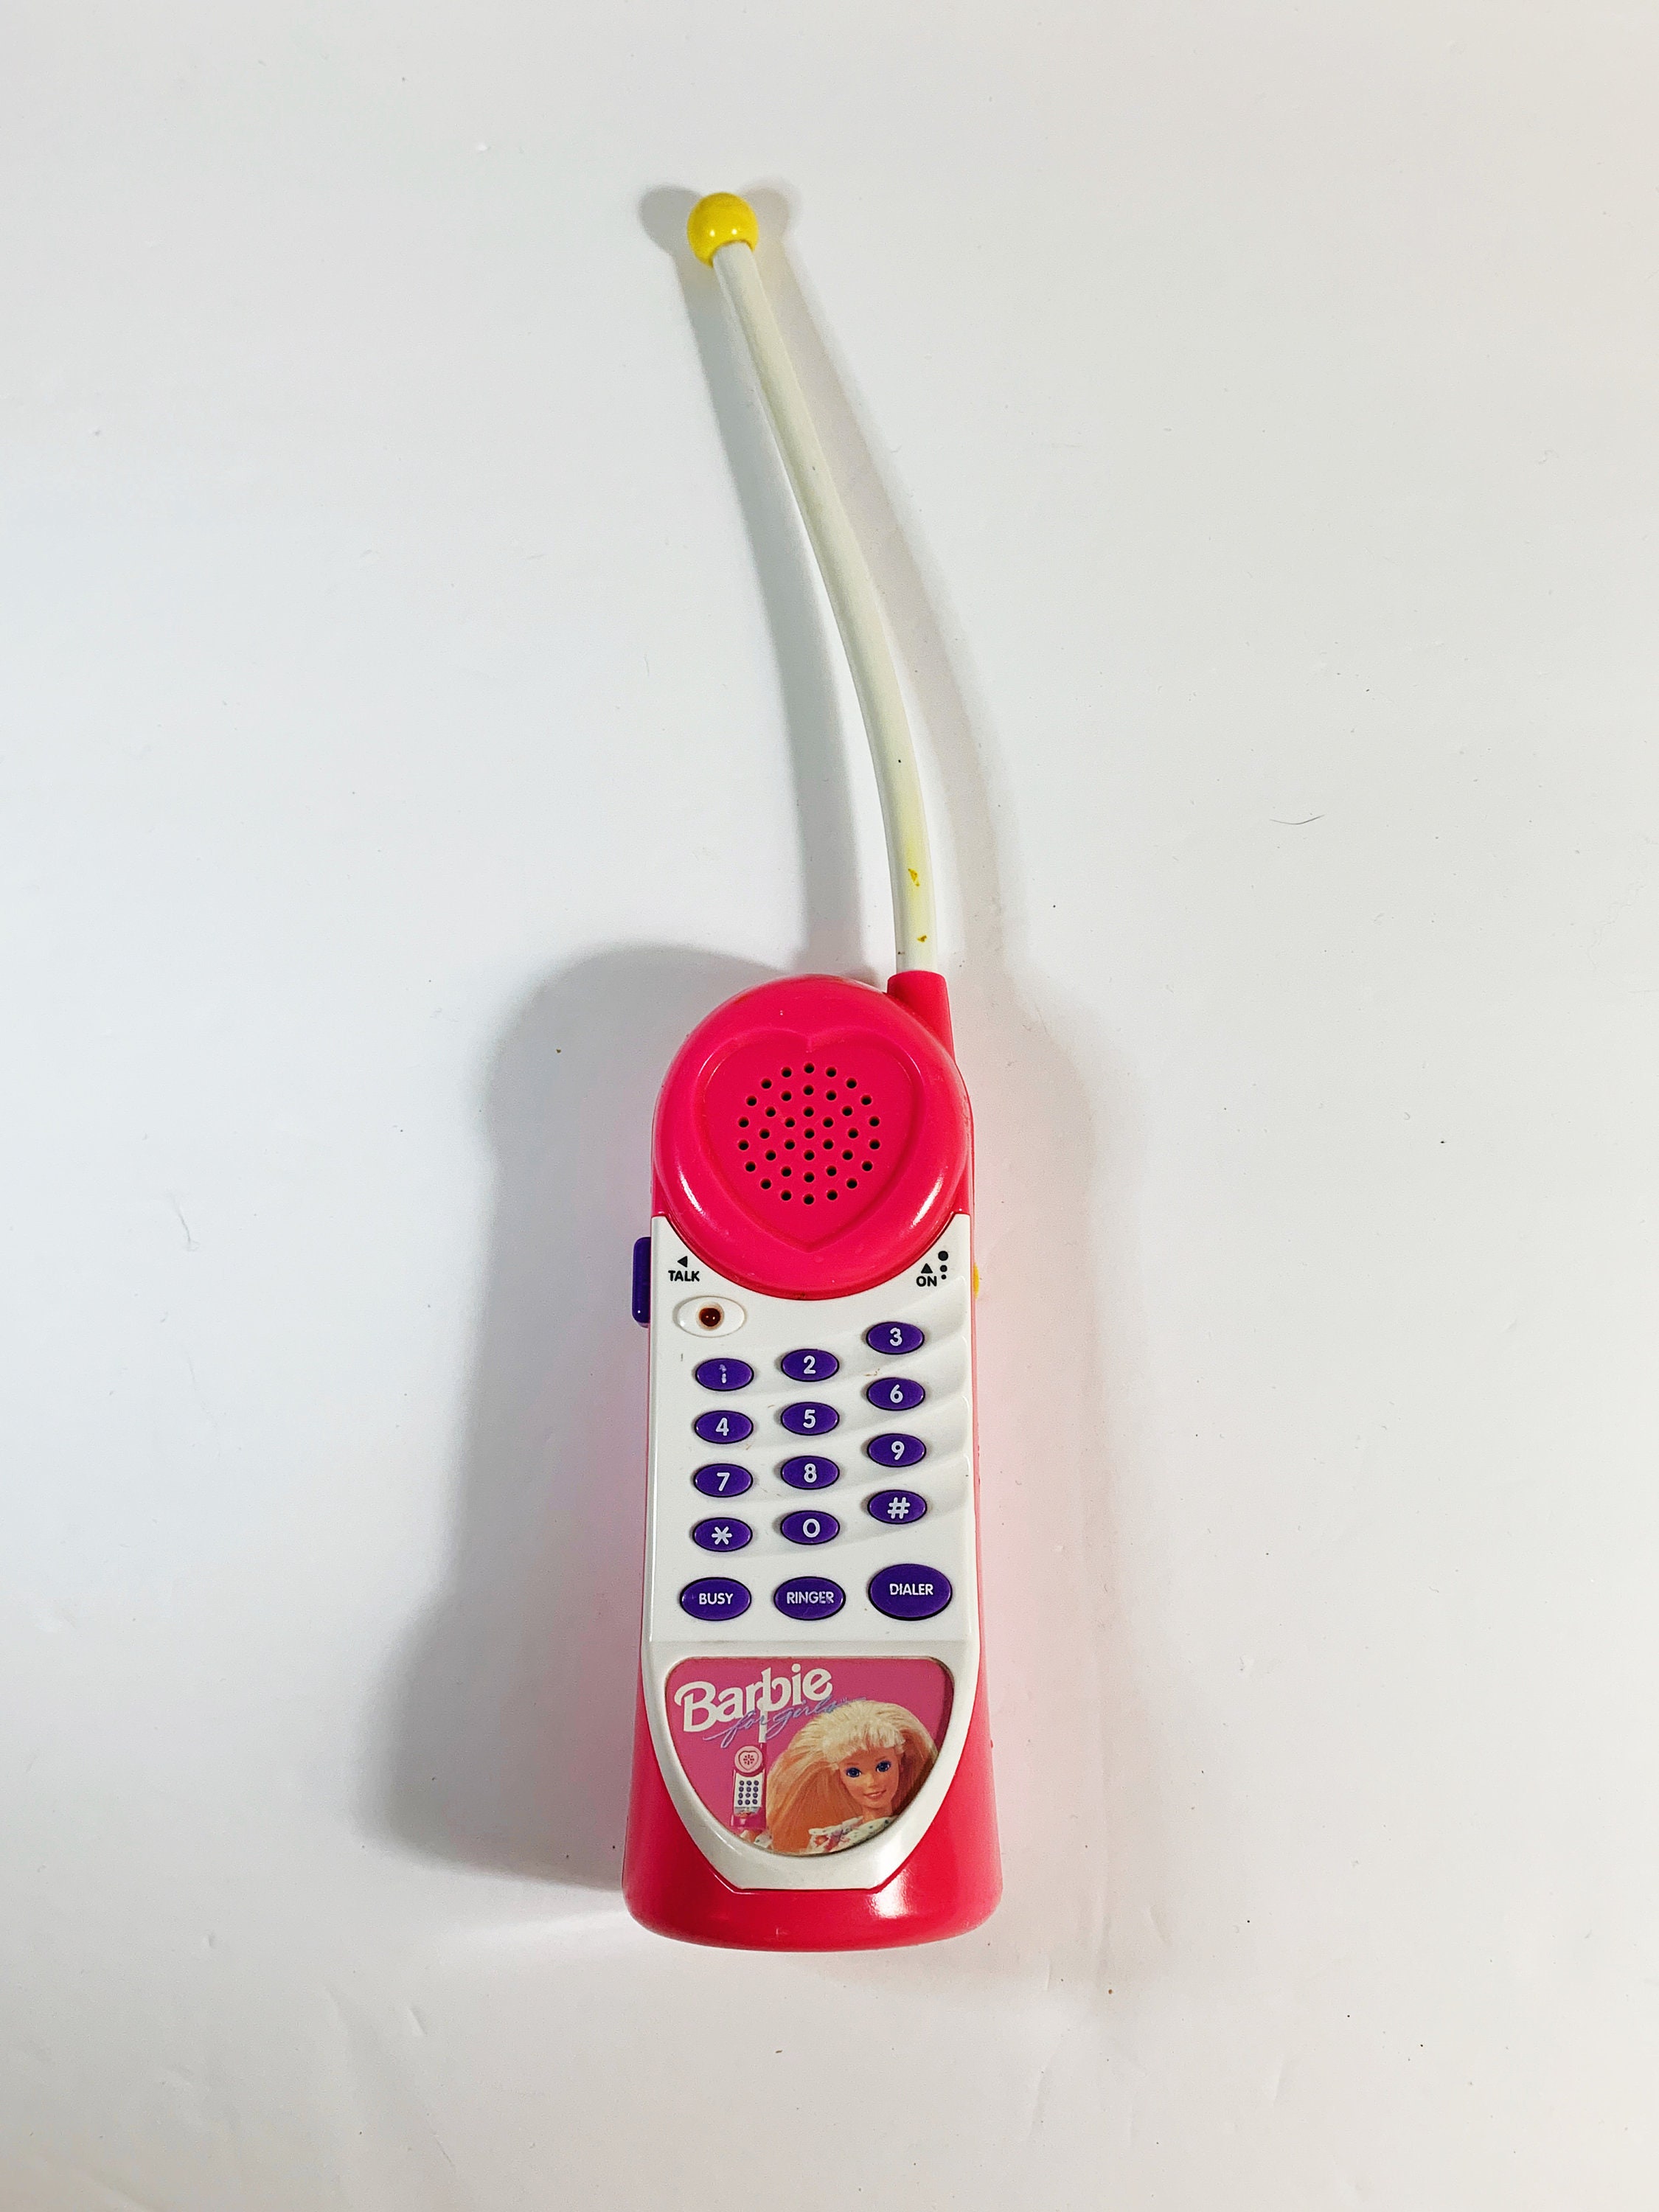 BARBIE Phone/walkie TALKIE Toy so Retro Great Pretend Play Item